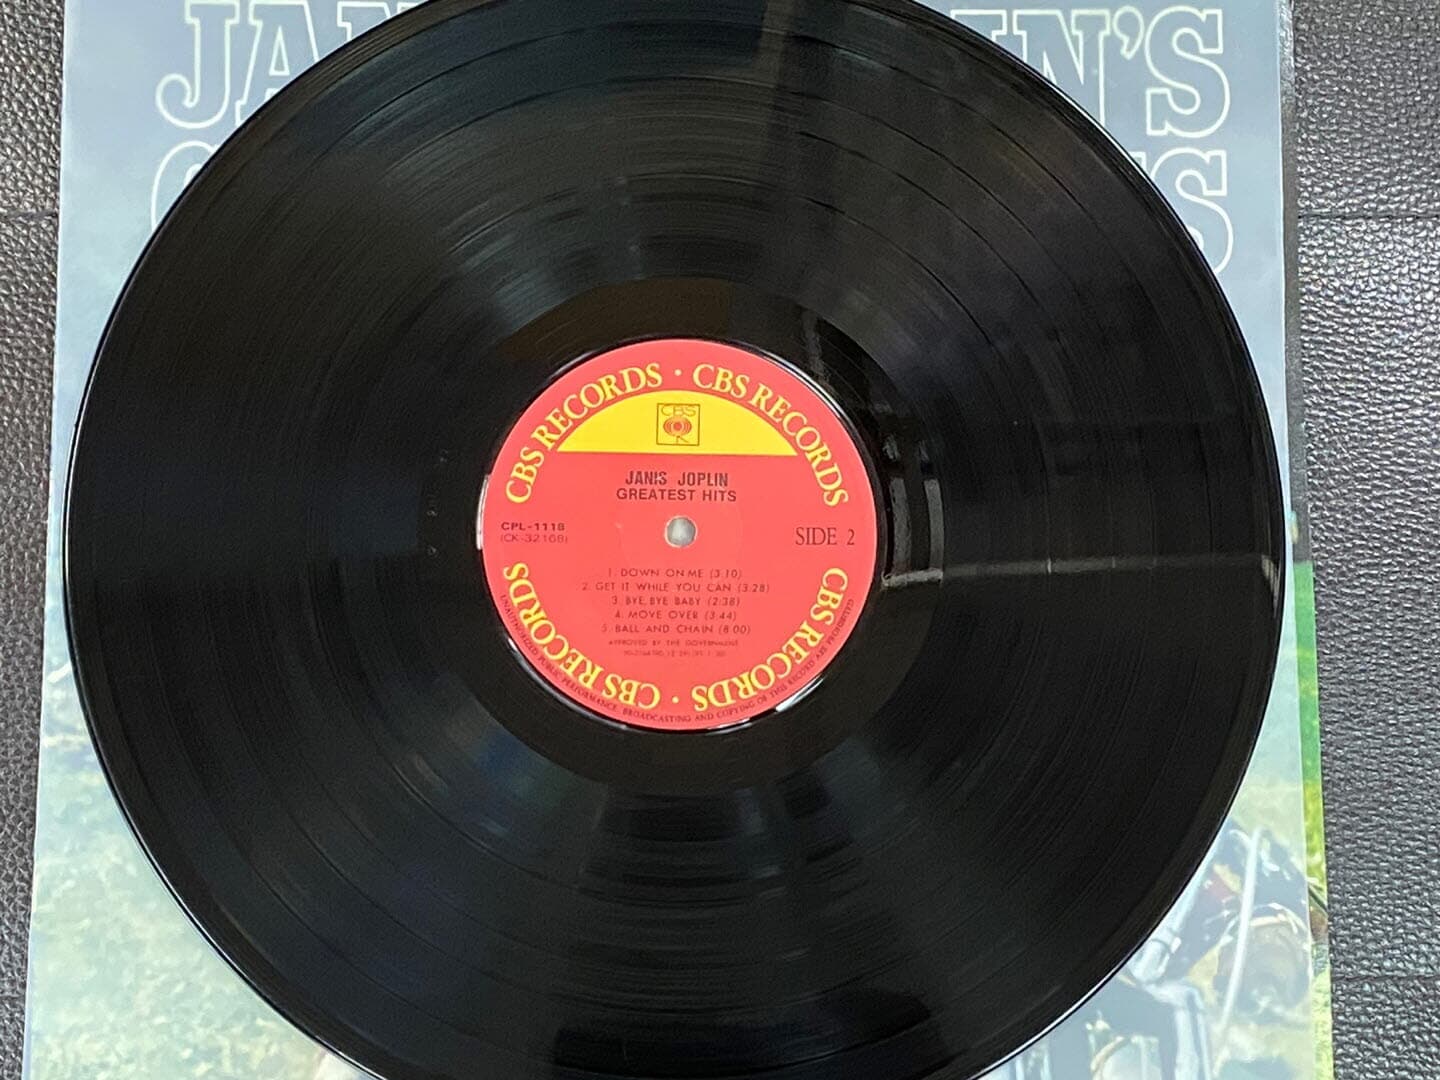 [LP] 재니스 조플린 - Janis Joplin - Greatest Hits LP [CBS Korea-라이센스반]